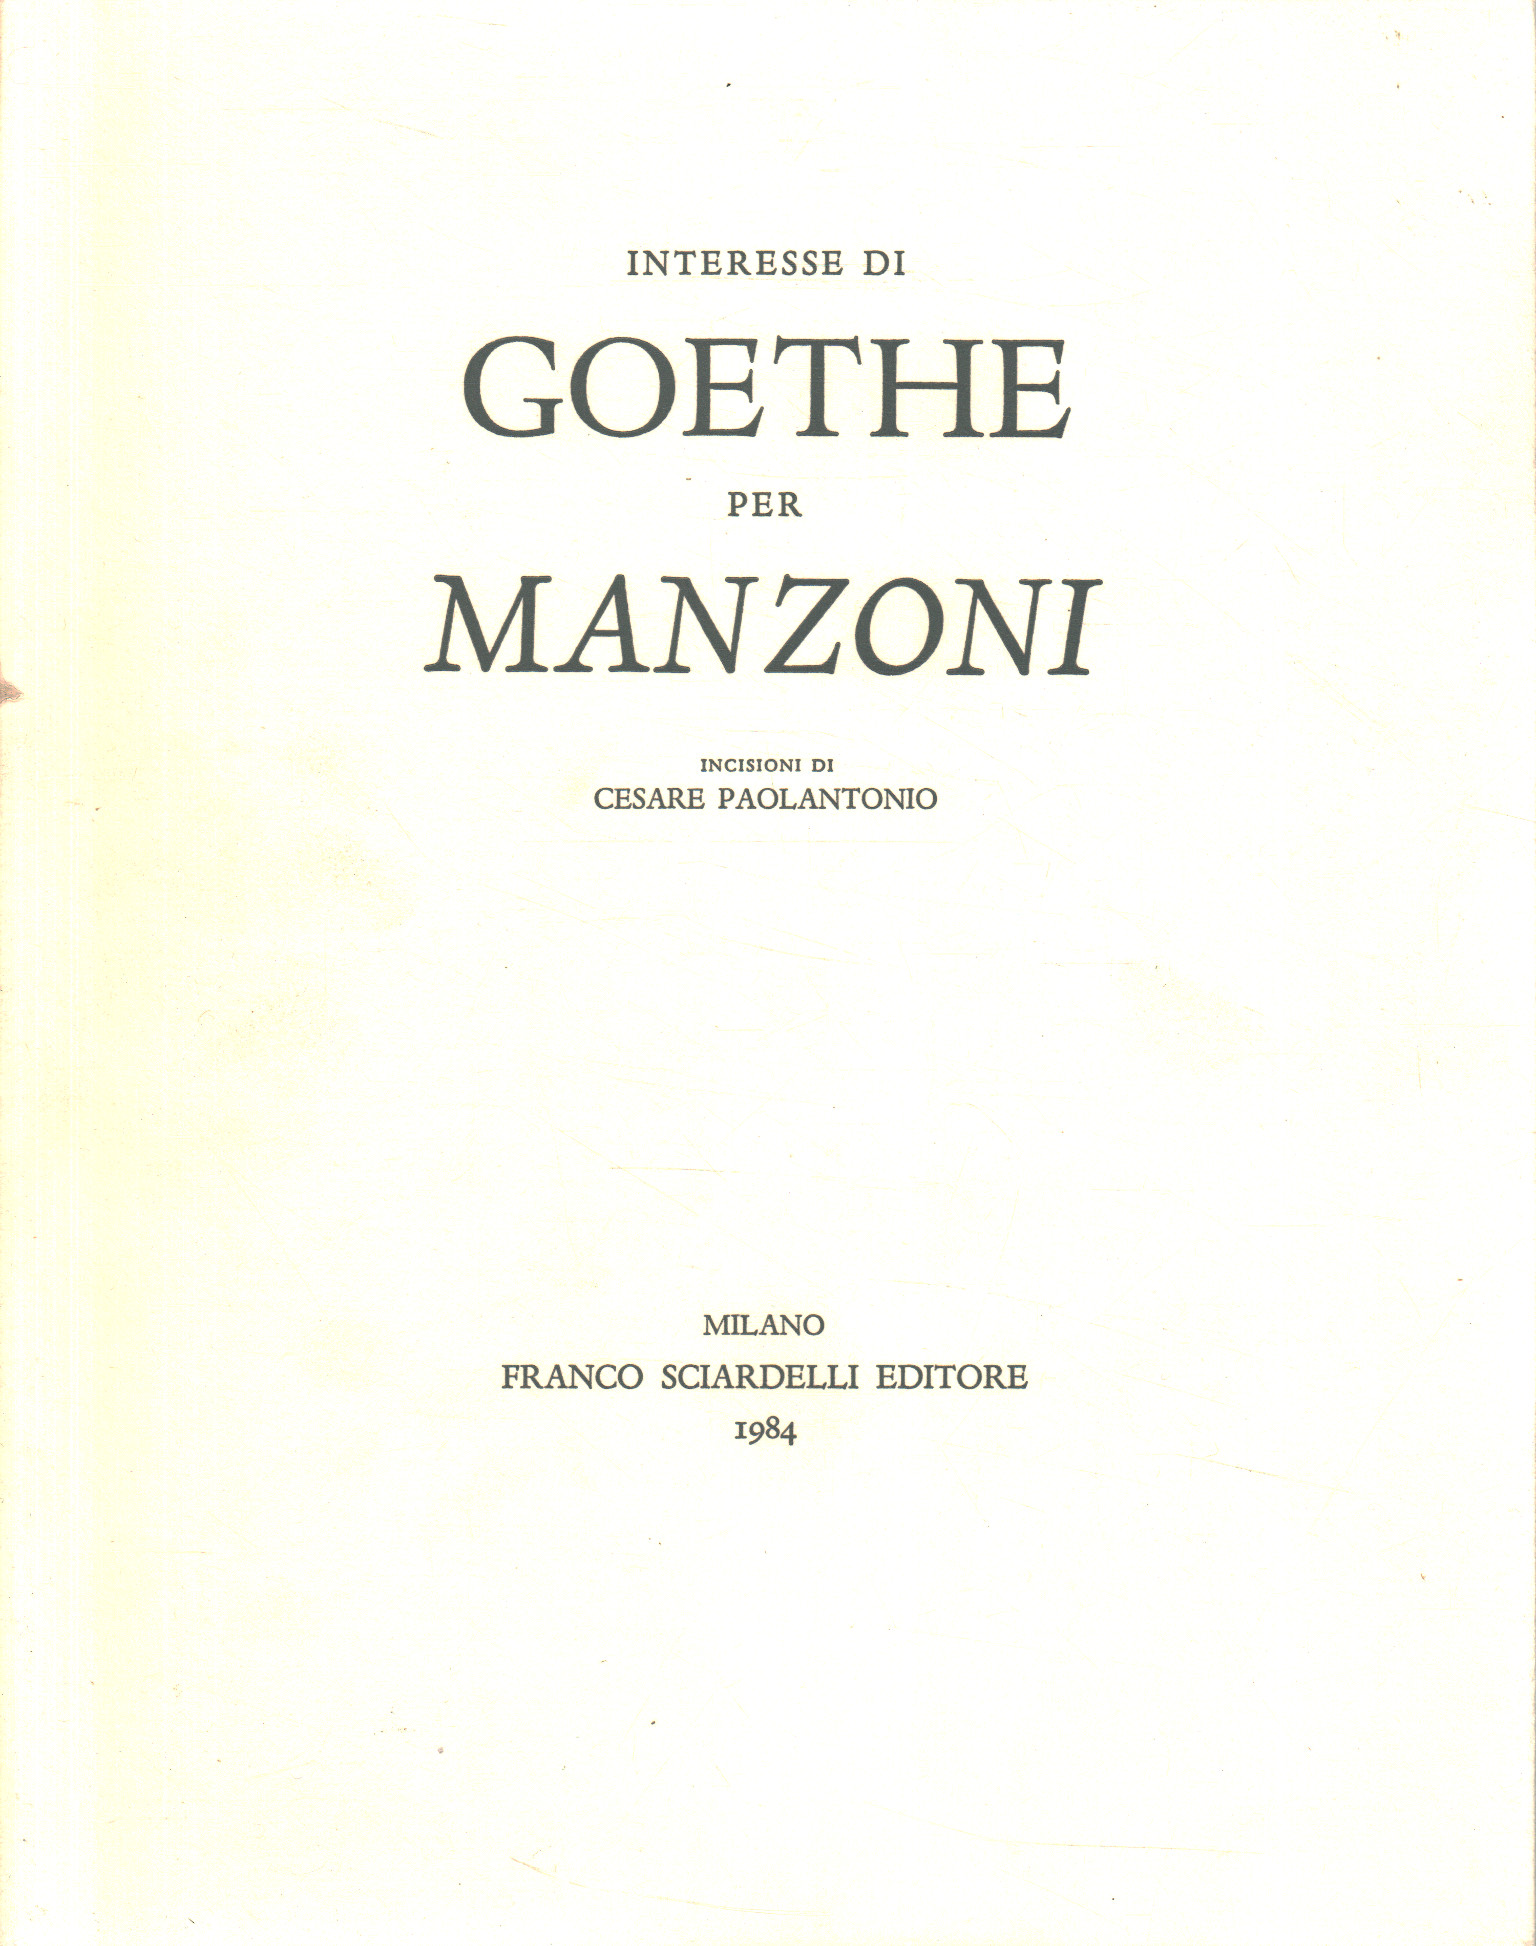 Goethes Interesse an Manzoni